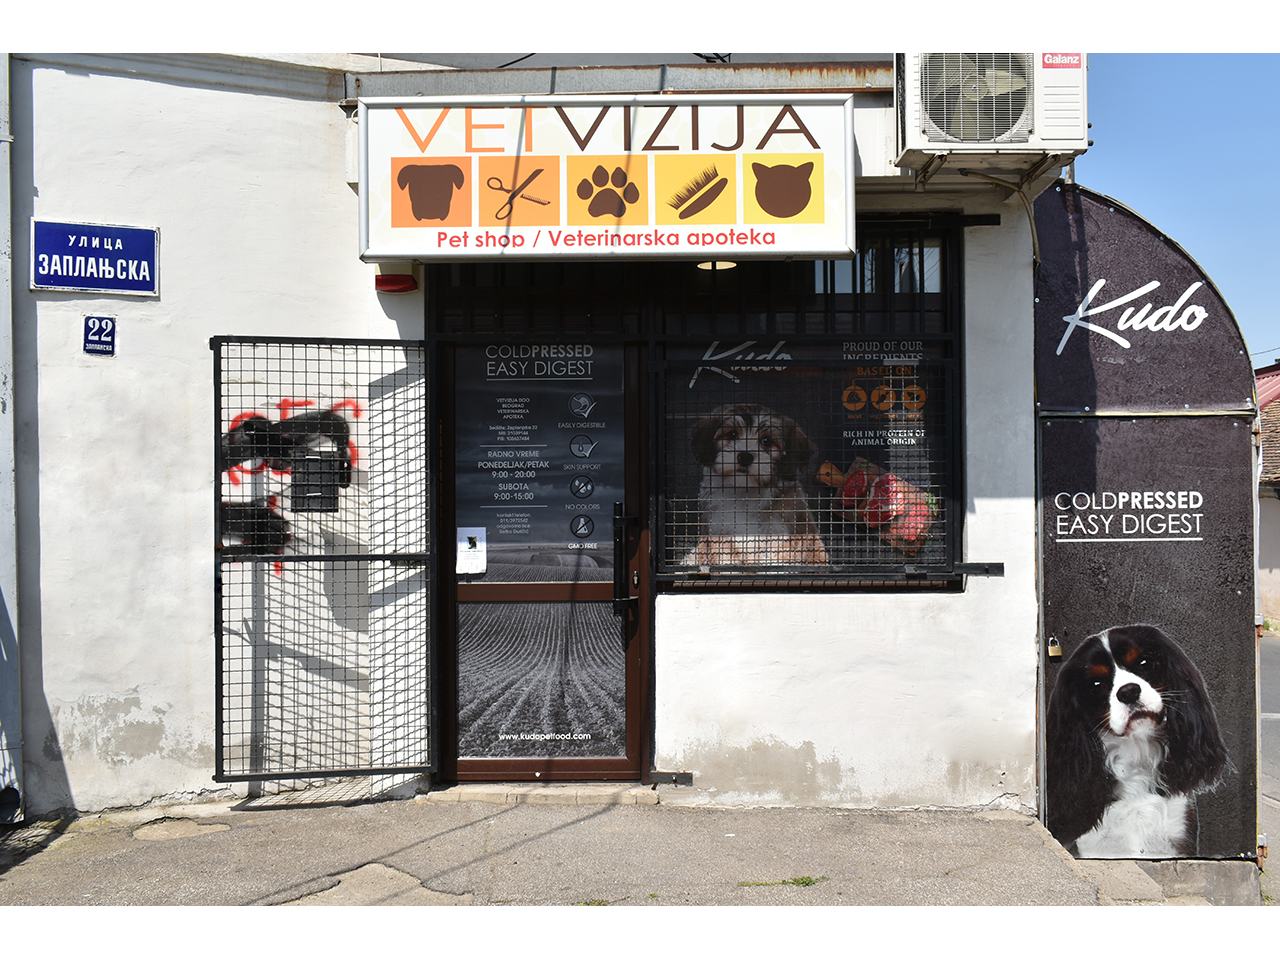 Photo 1 - VETVIZIJA - VETERINARY PHARMACY AND PET SHOP Pets, pet shop Belgrade